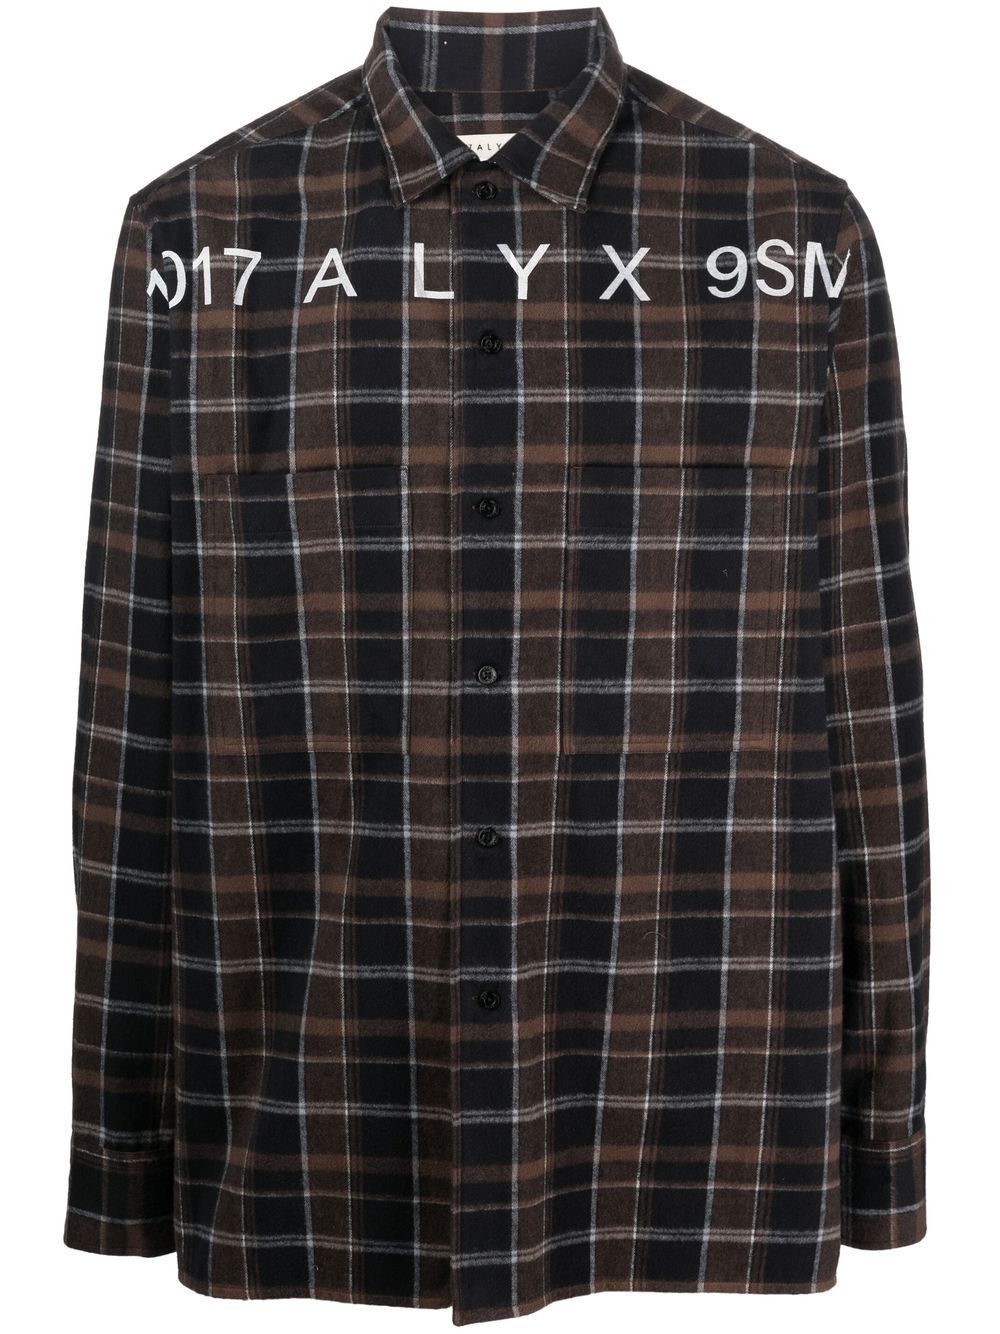 1017 ALYX 9SM Cotton Tartan long-sleeve Shirt - Farfetch